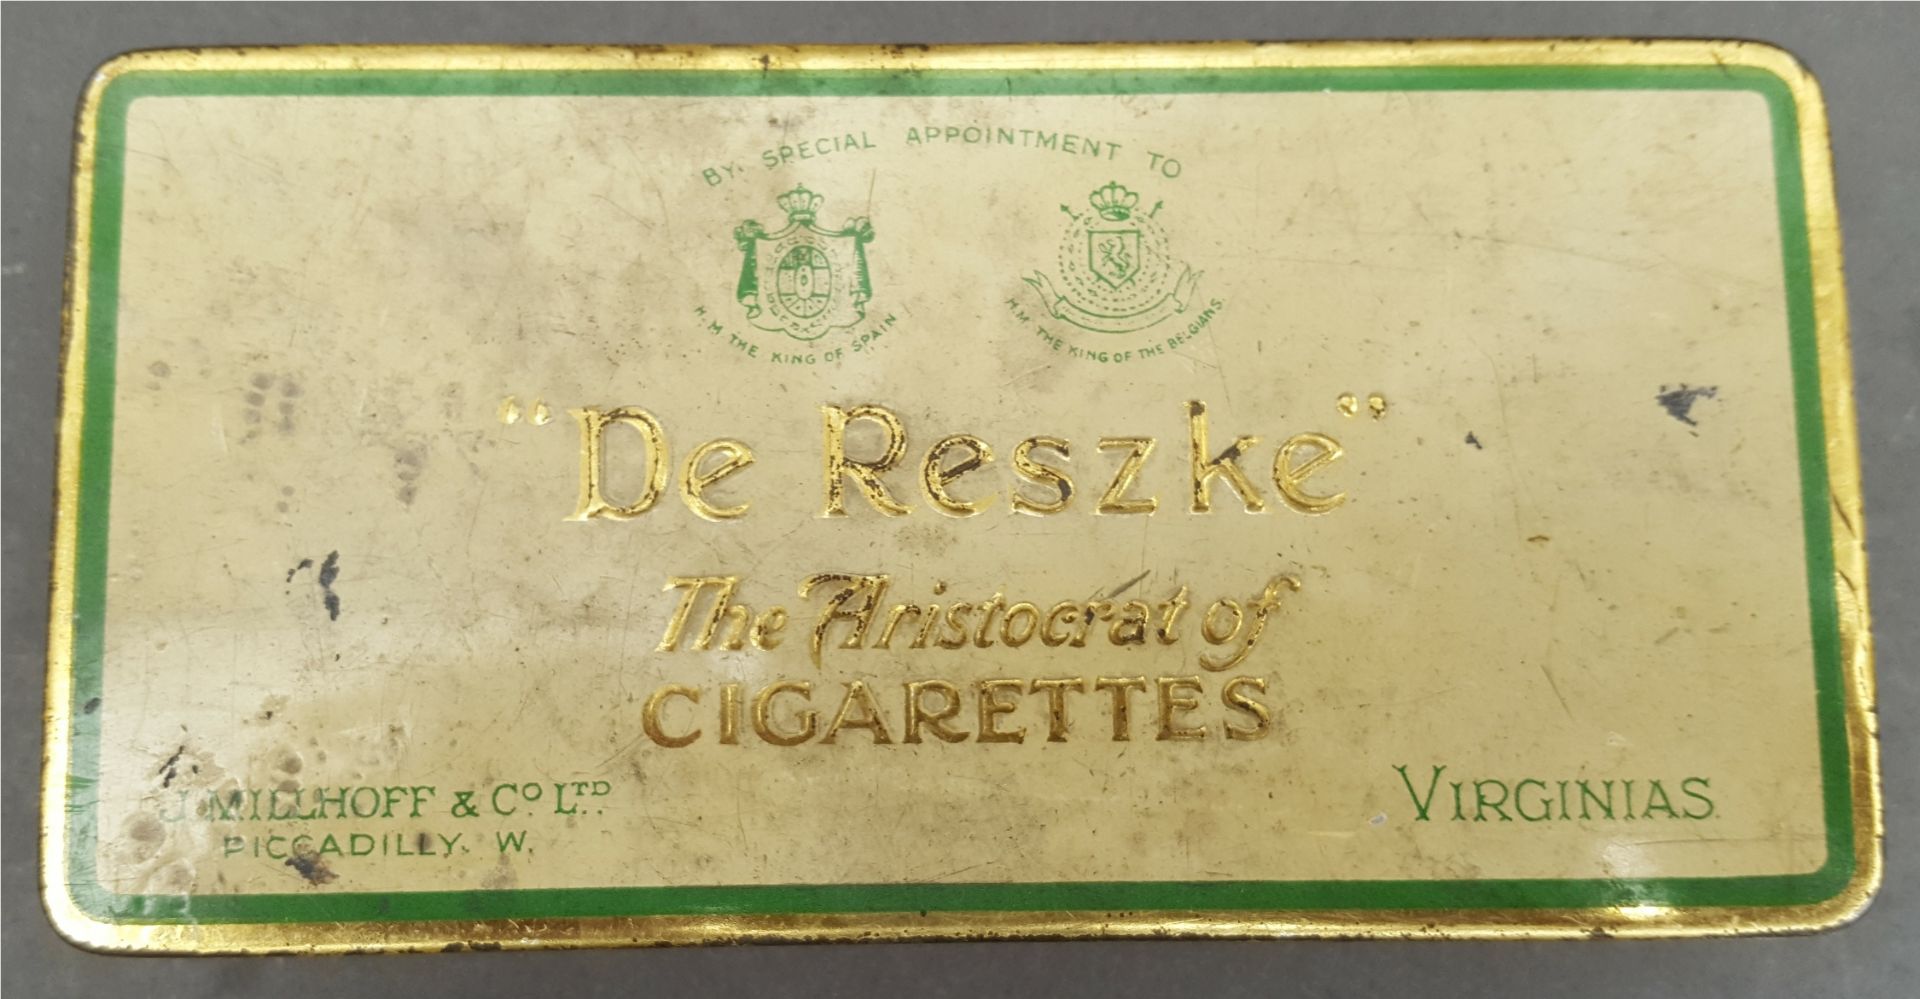 Antique Vintage Collection of 150 plus Cigarette Cards in a De Reszke Cigarette Tin - Image 2 of 2